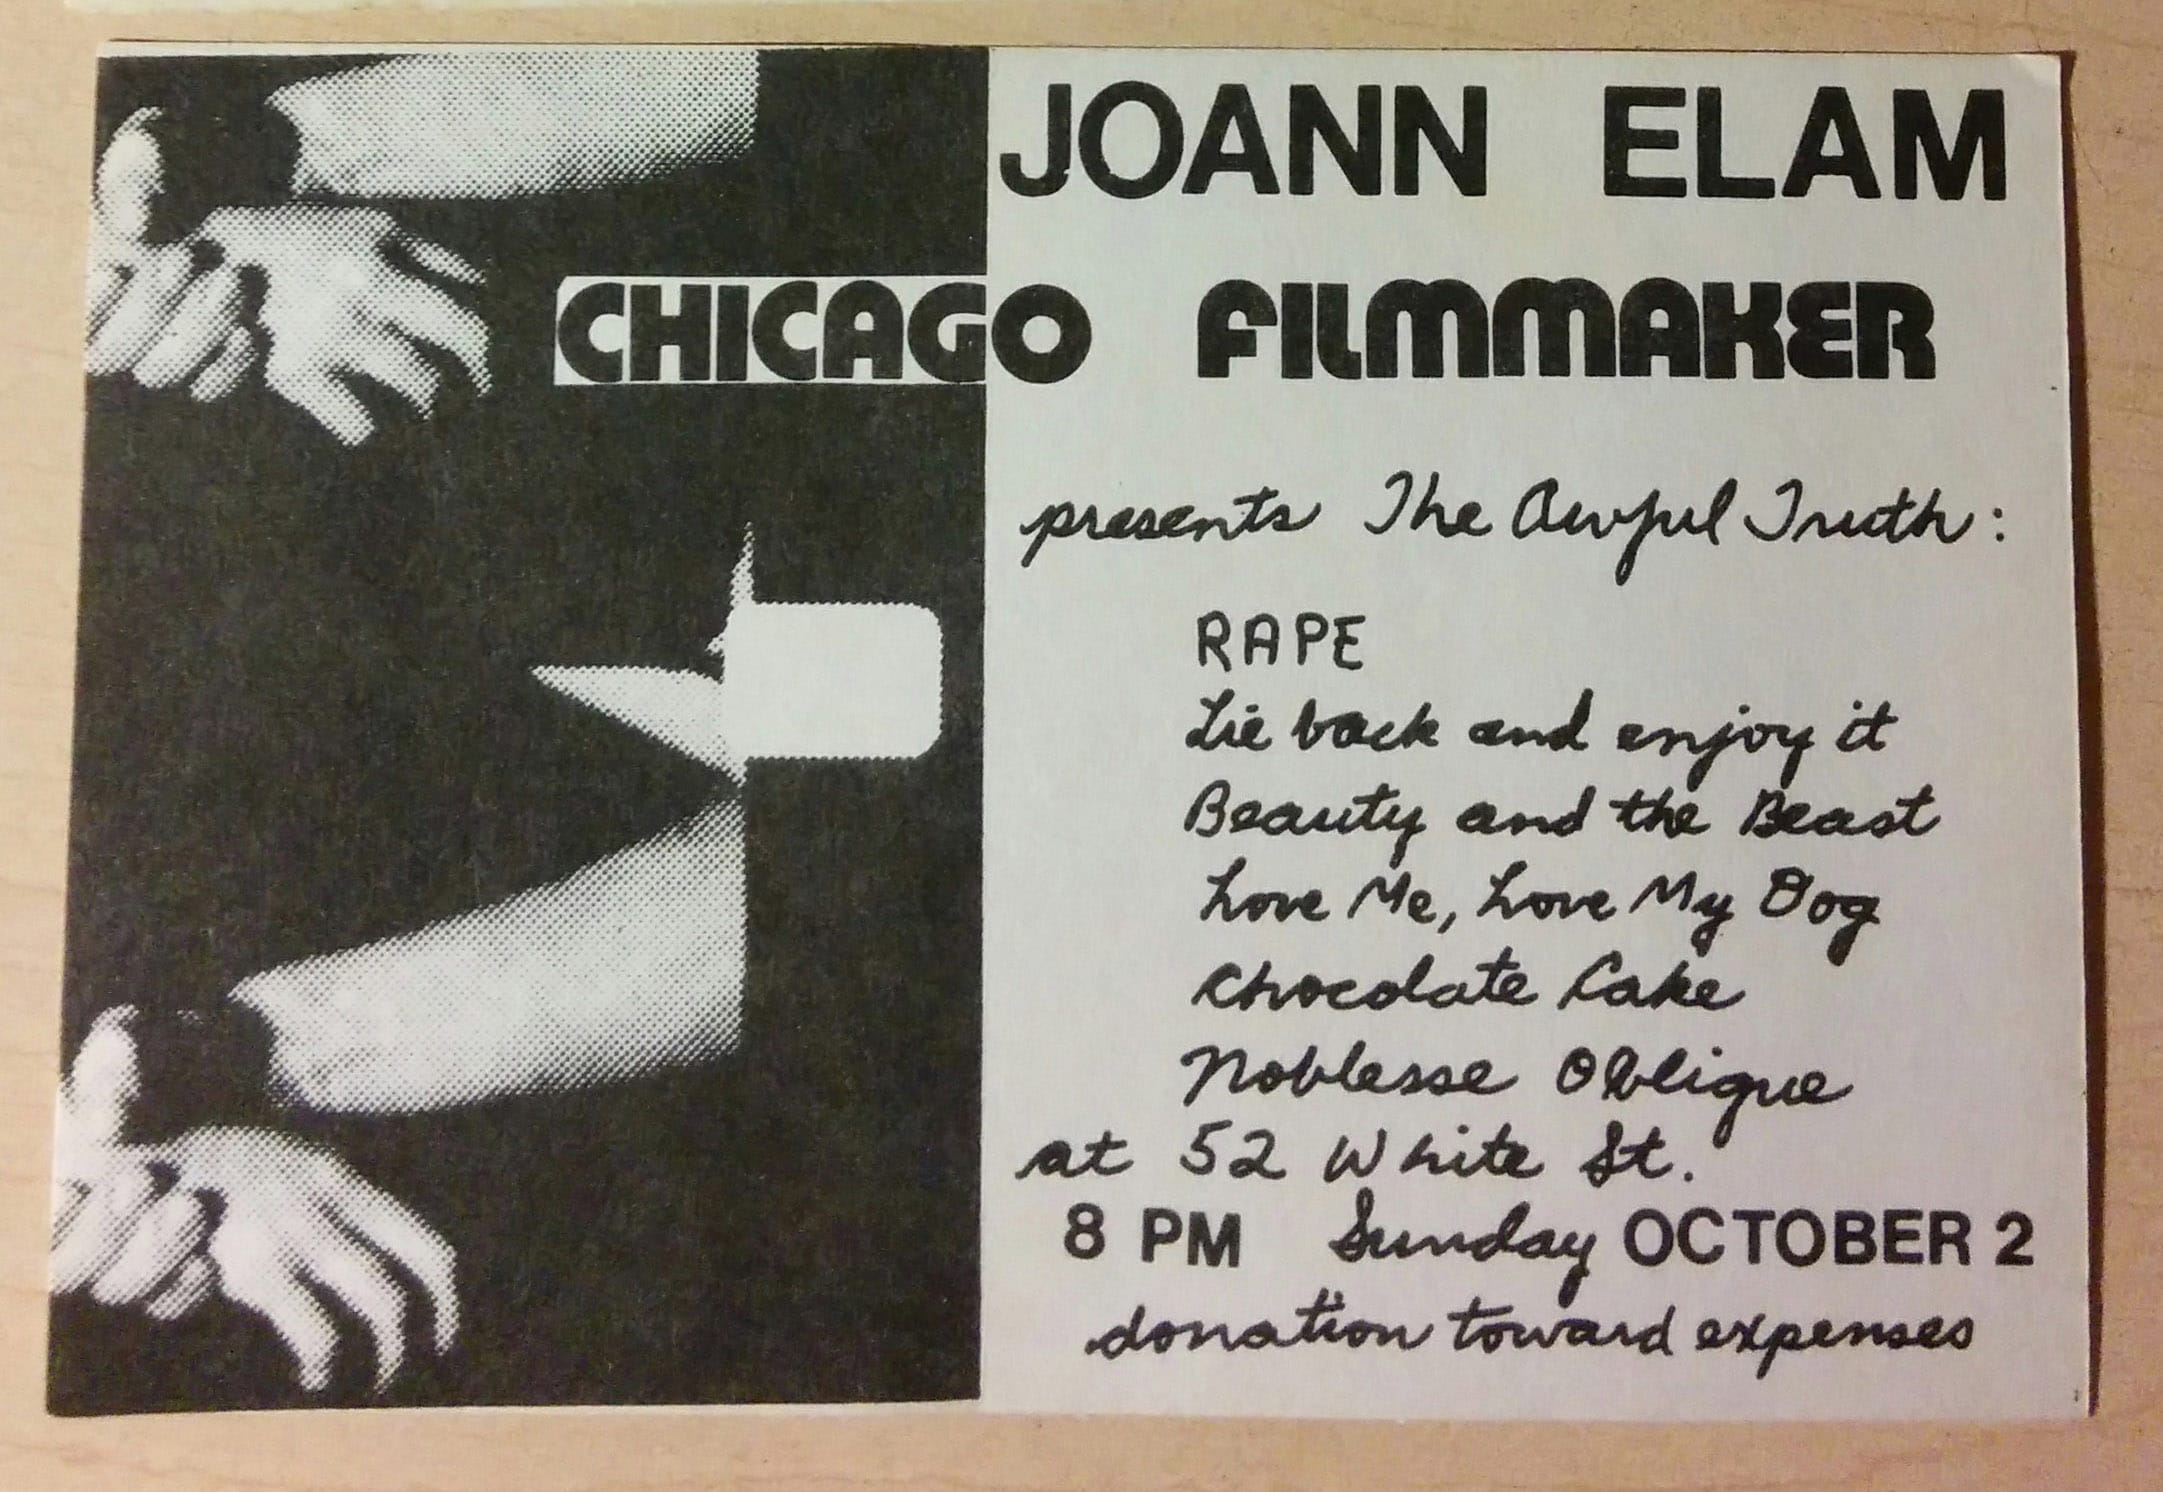 ChicagoFilmmaker Card